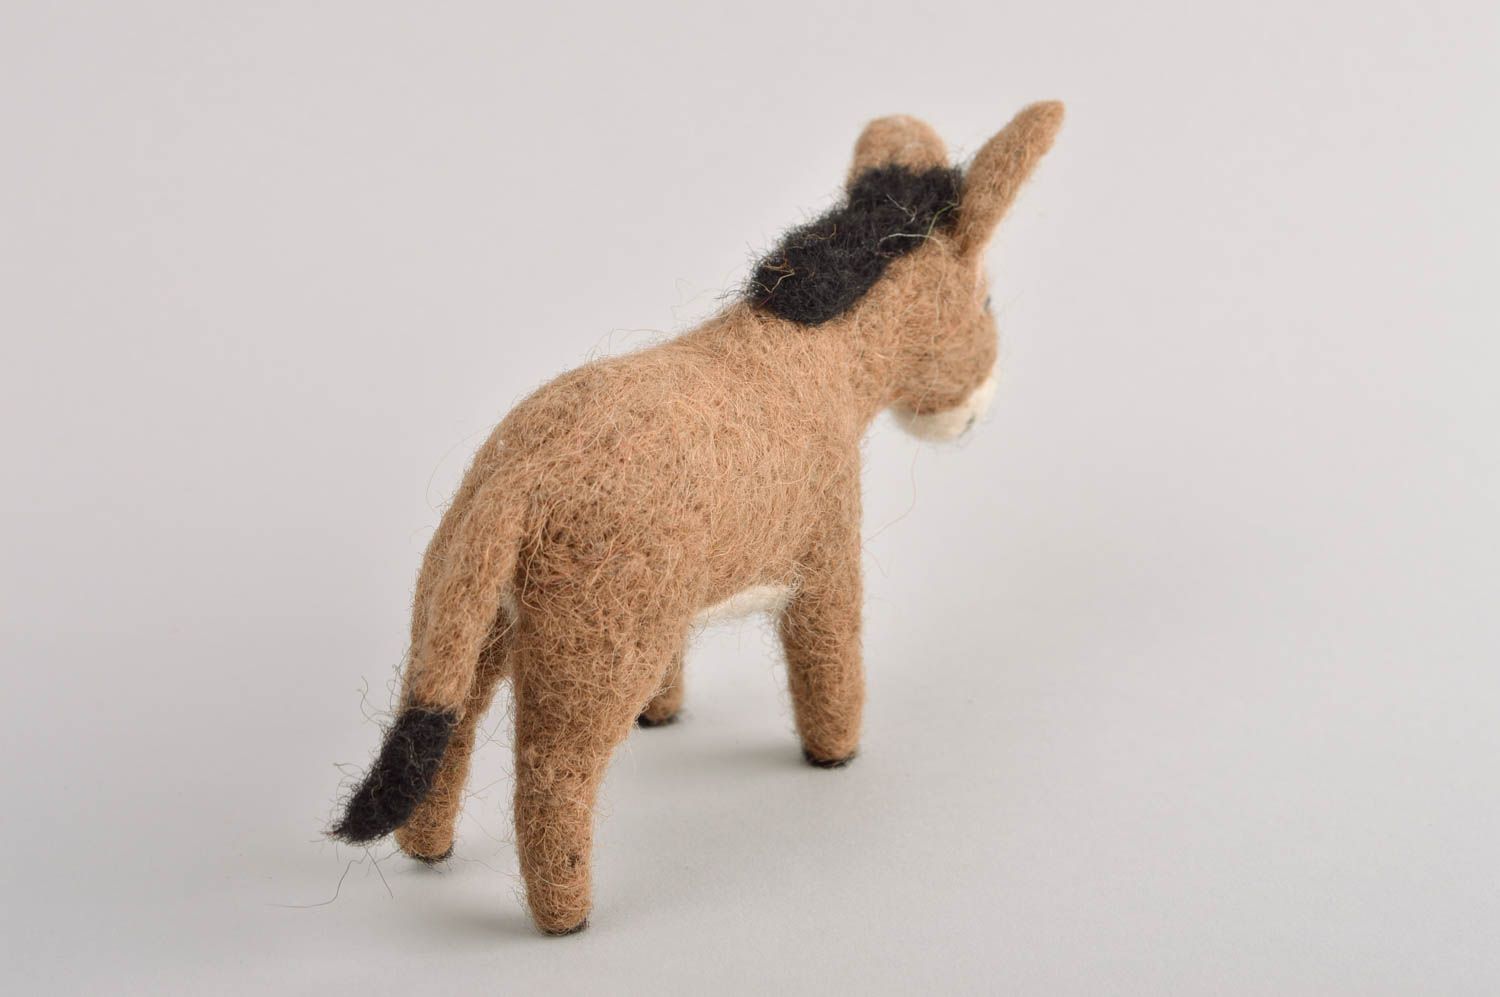 Handmade toy unusual toy woolen toy for kids interior decor ideas gift ideas photo 4